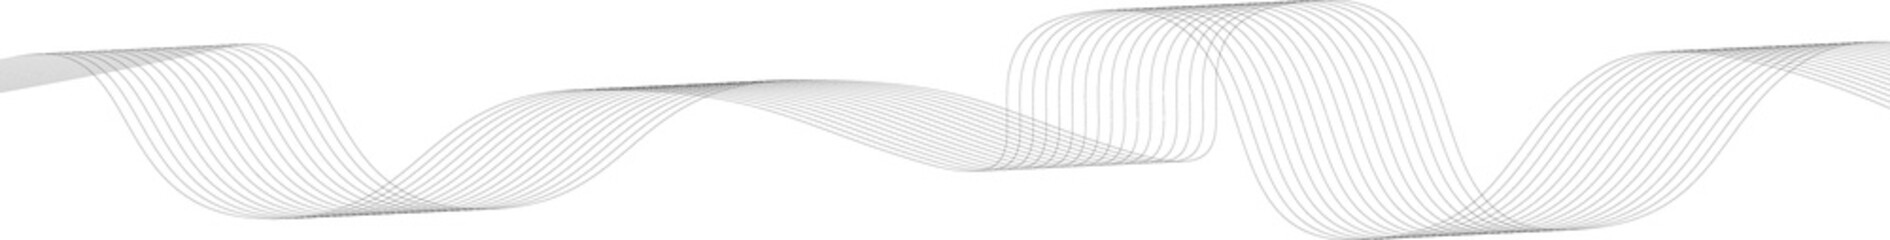 Wave line element. Design of technology